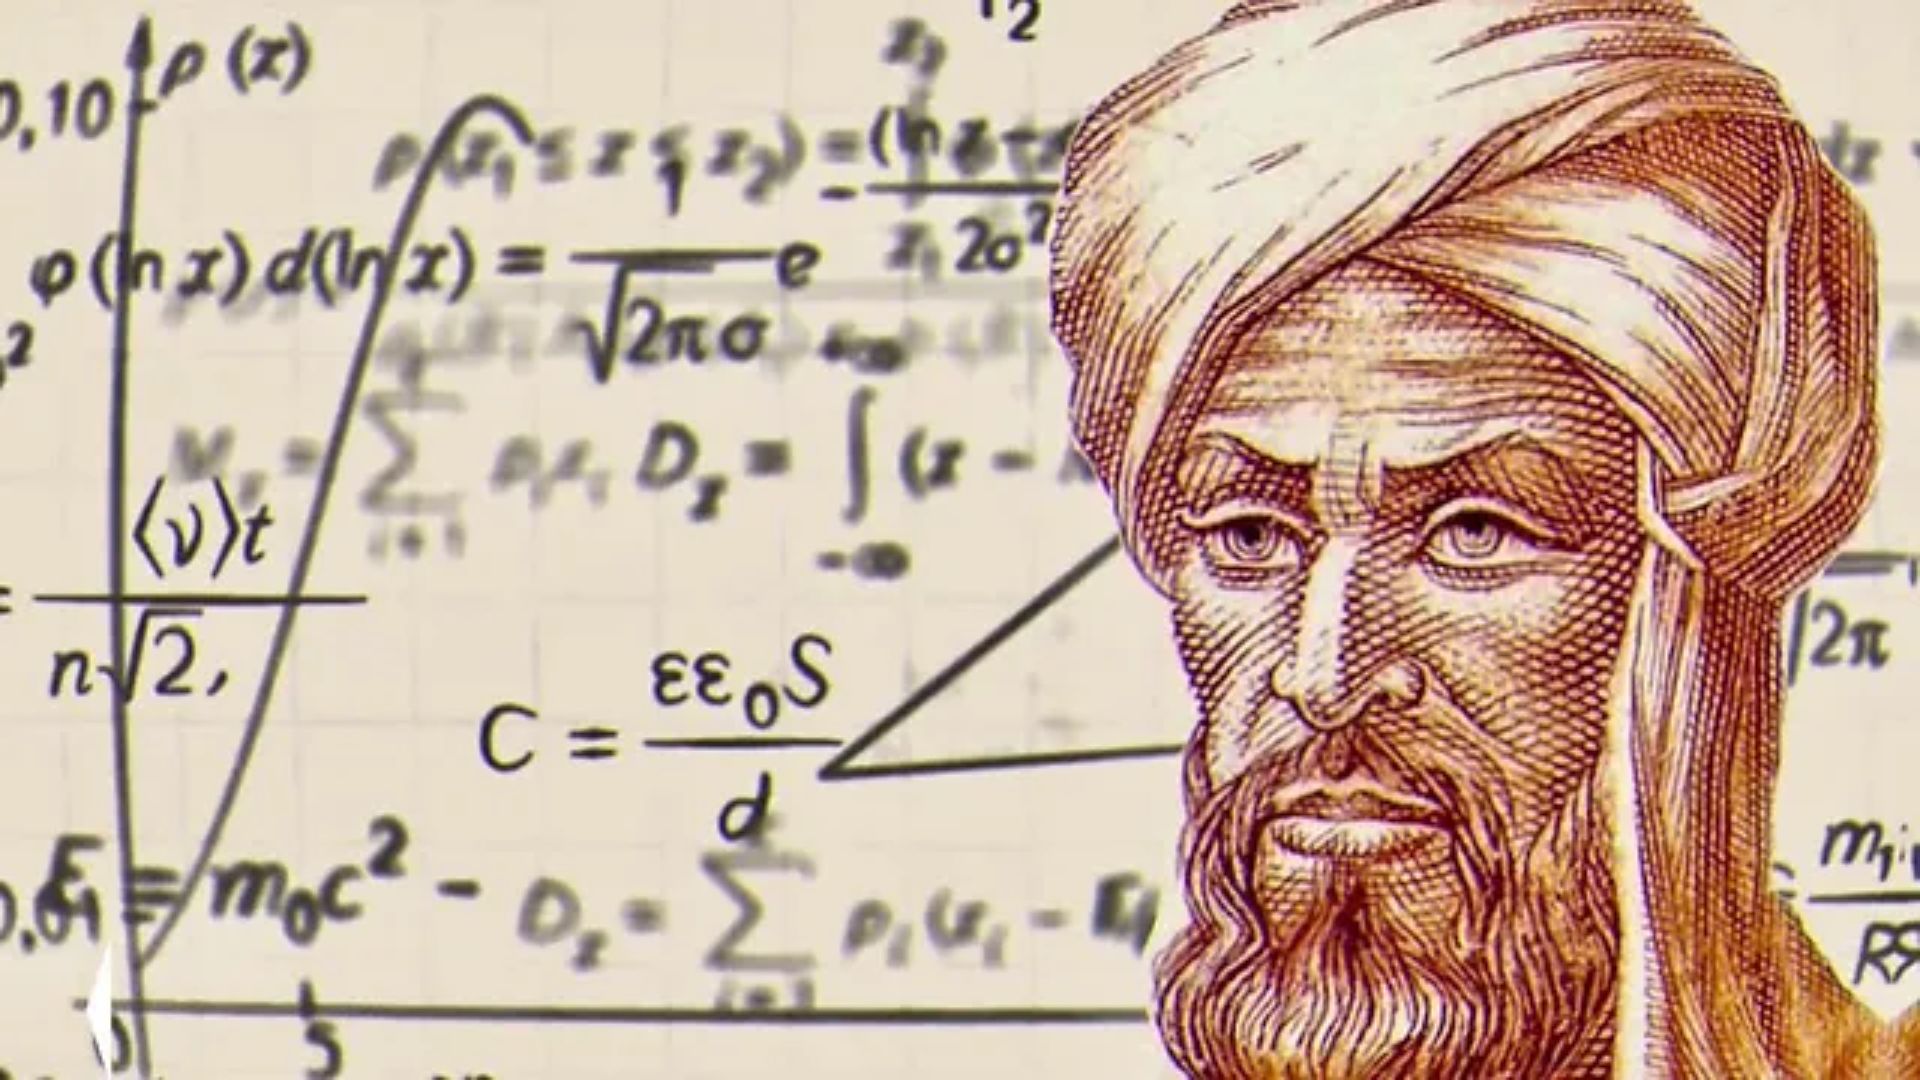 Al-Khwarizmi: Matematikawan, Astronom, dan Sejarawan Persia